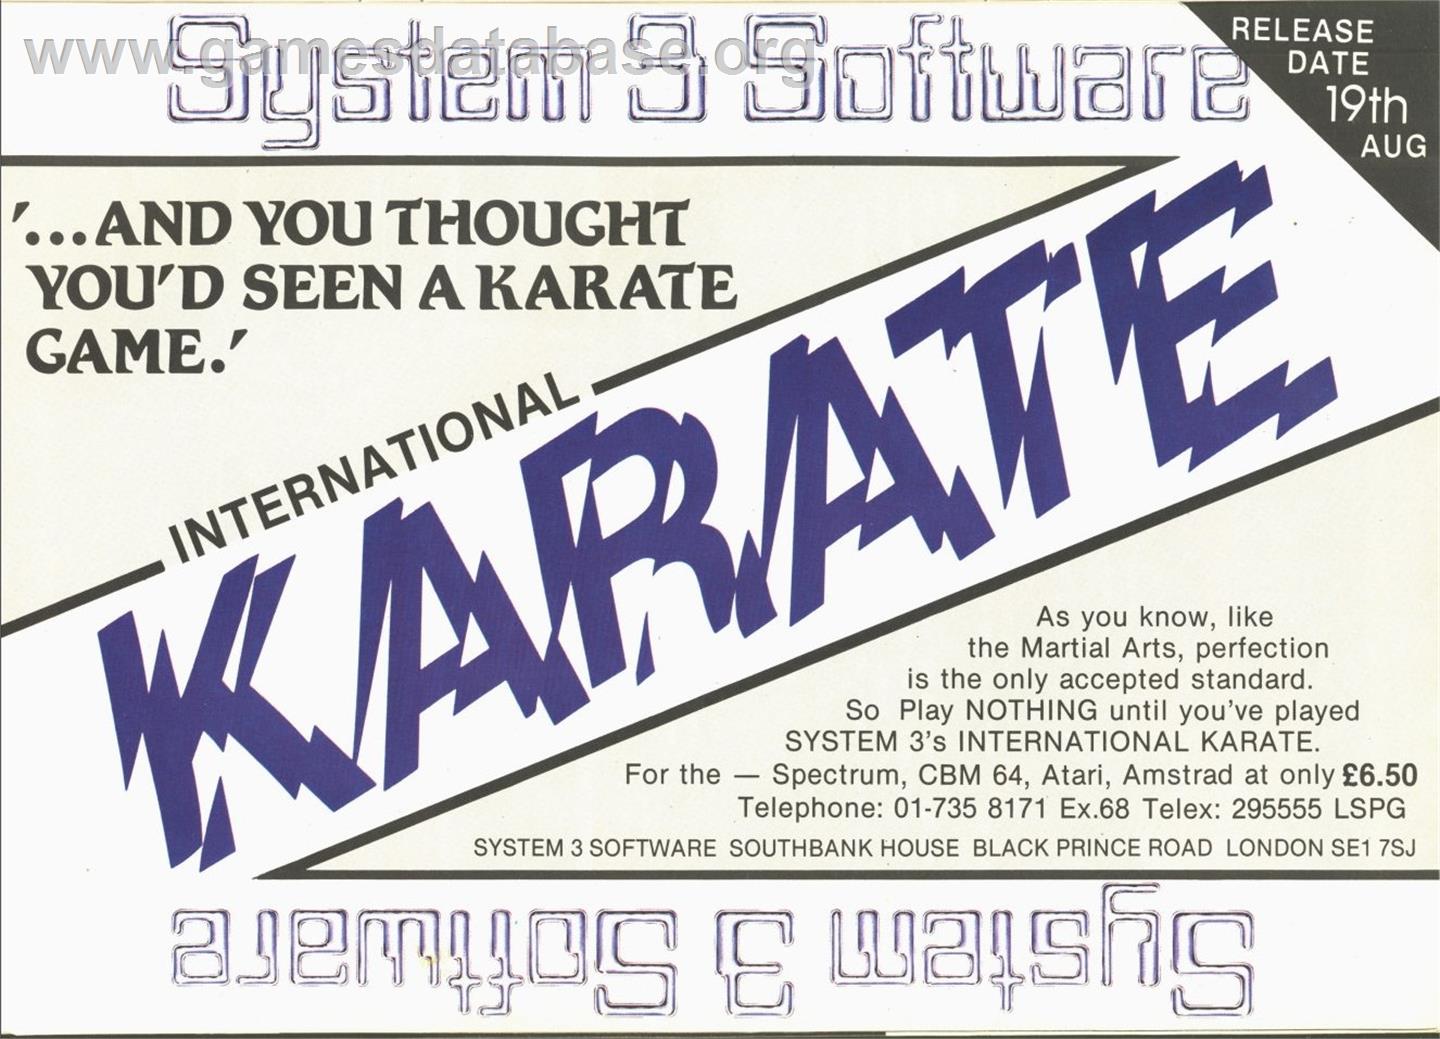 International Karate - MSX 2 - Artwork - Advert